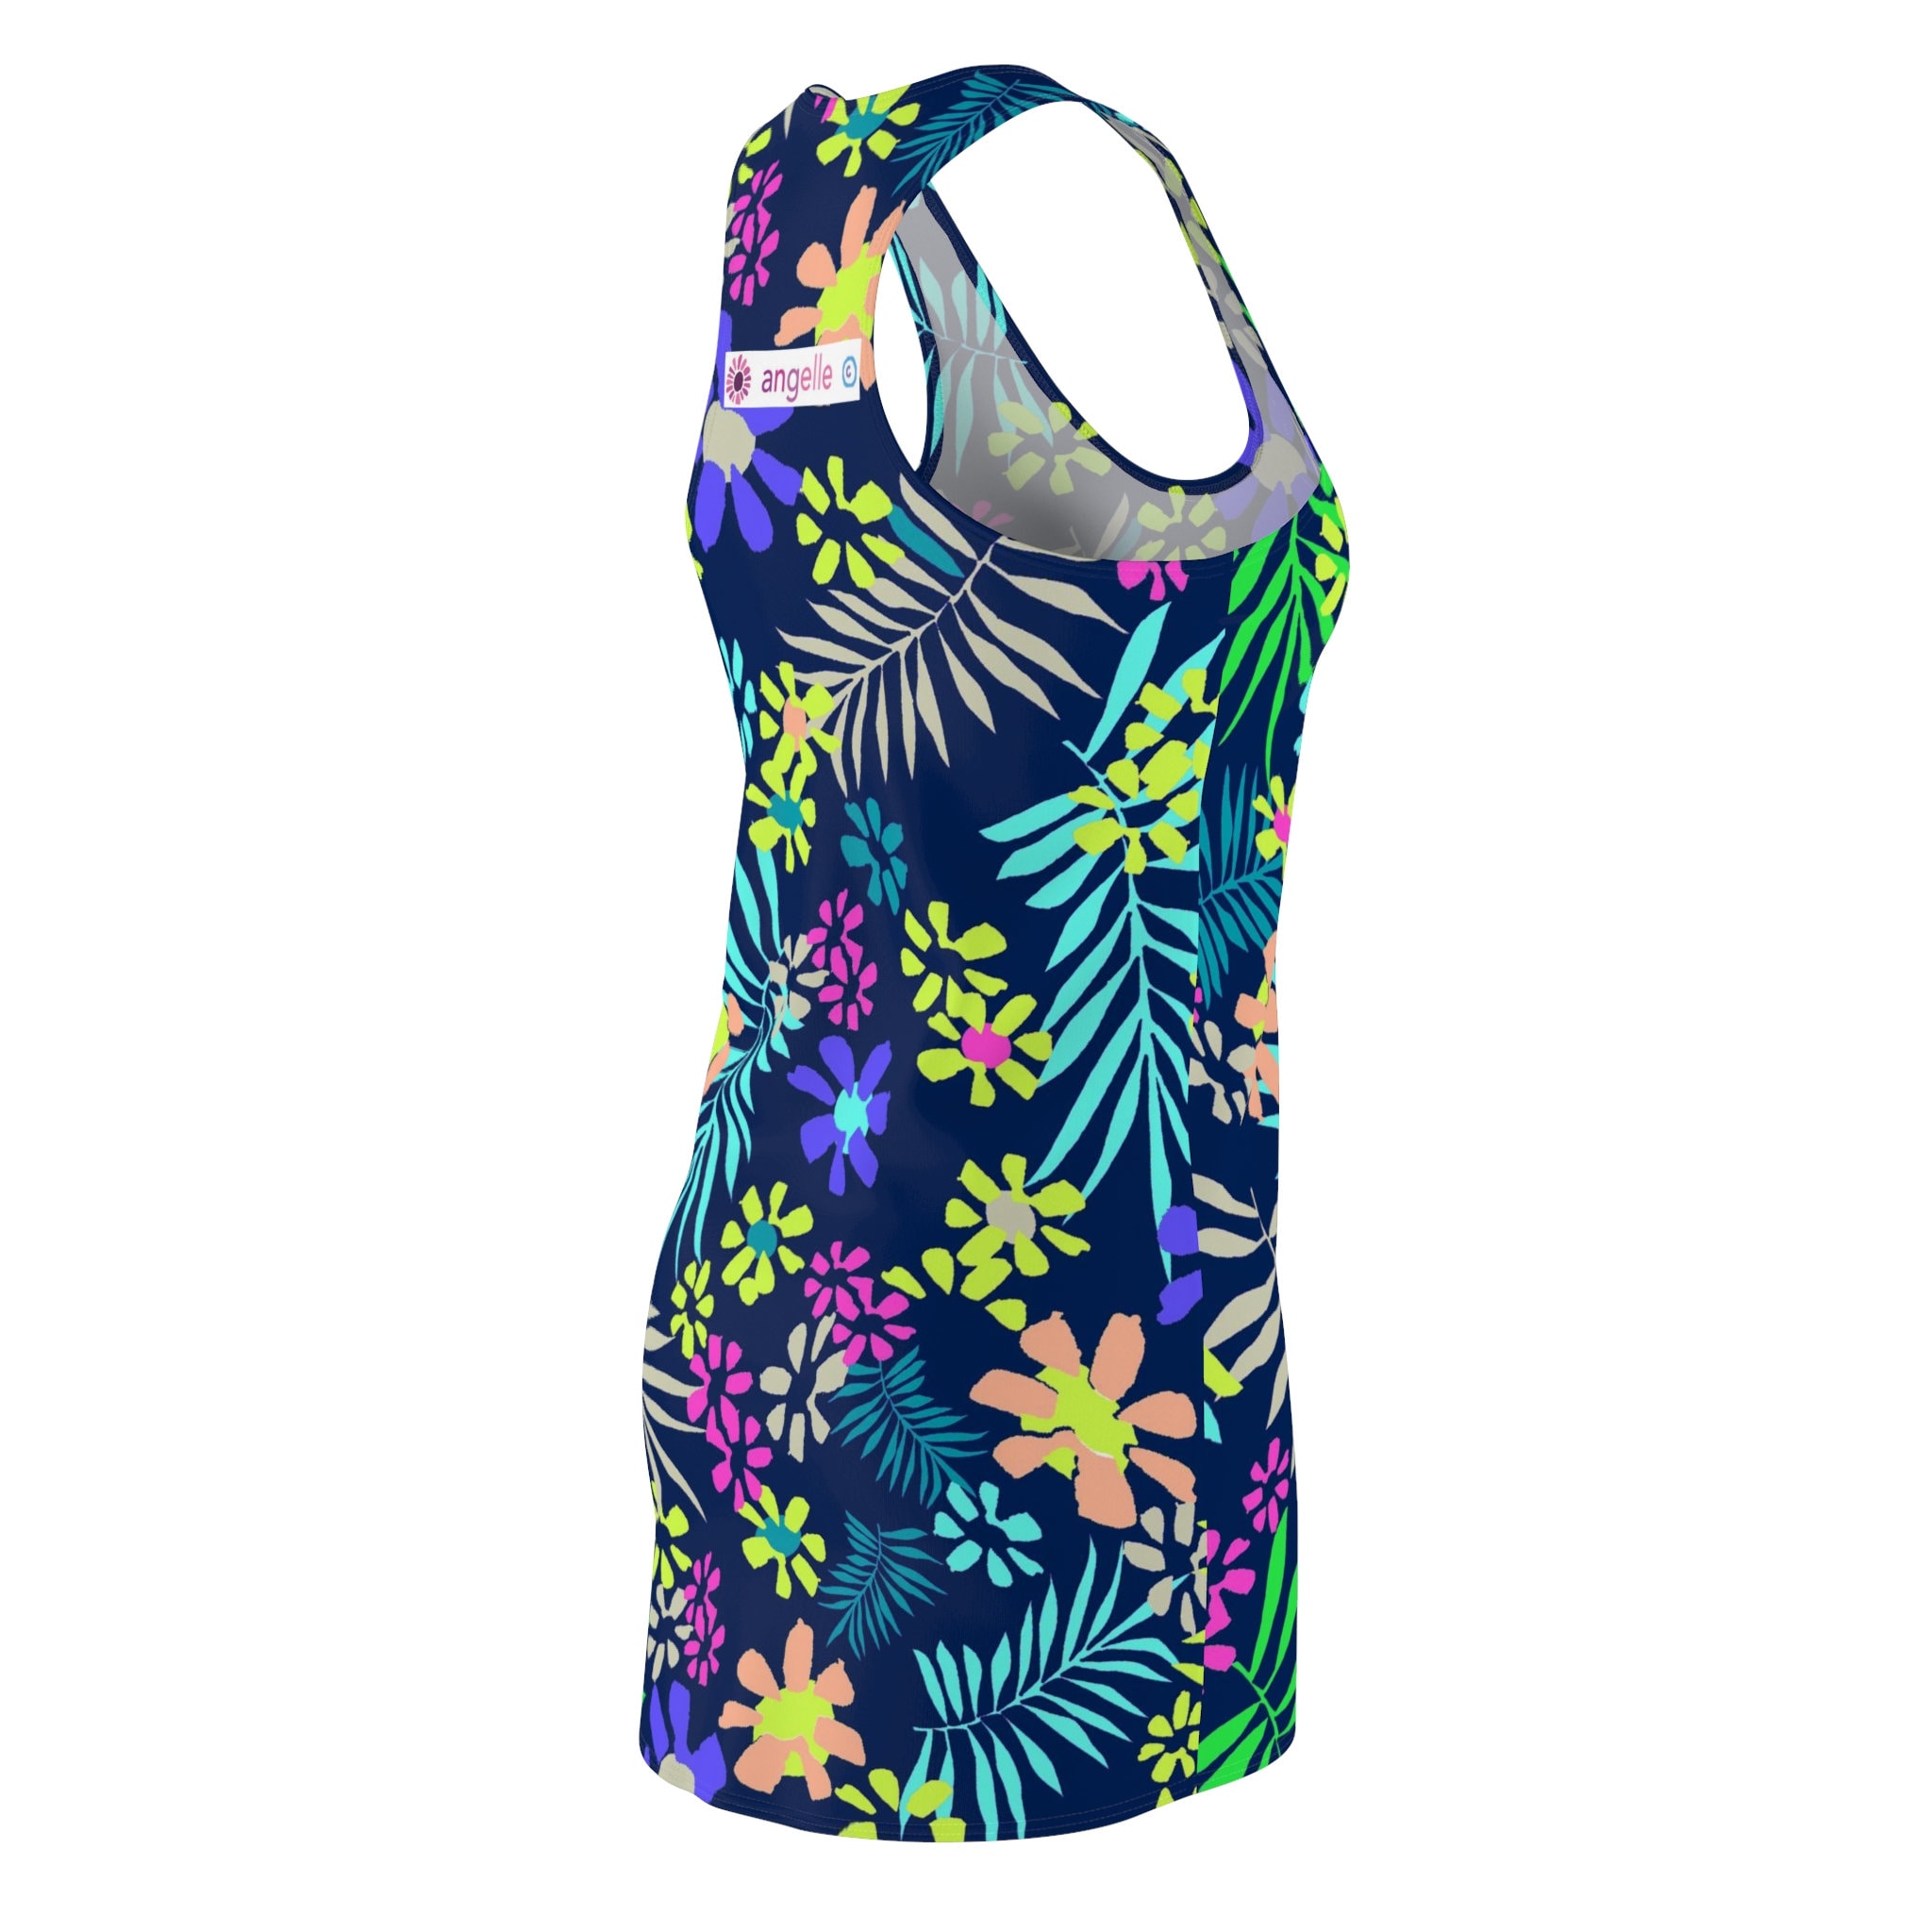 Tropical Azul Women's Cut & Sew Racerback Dress